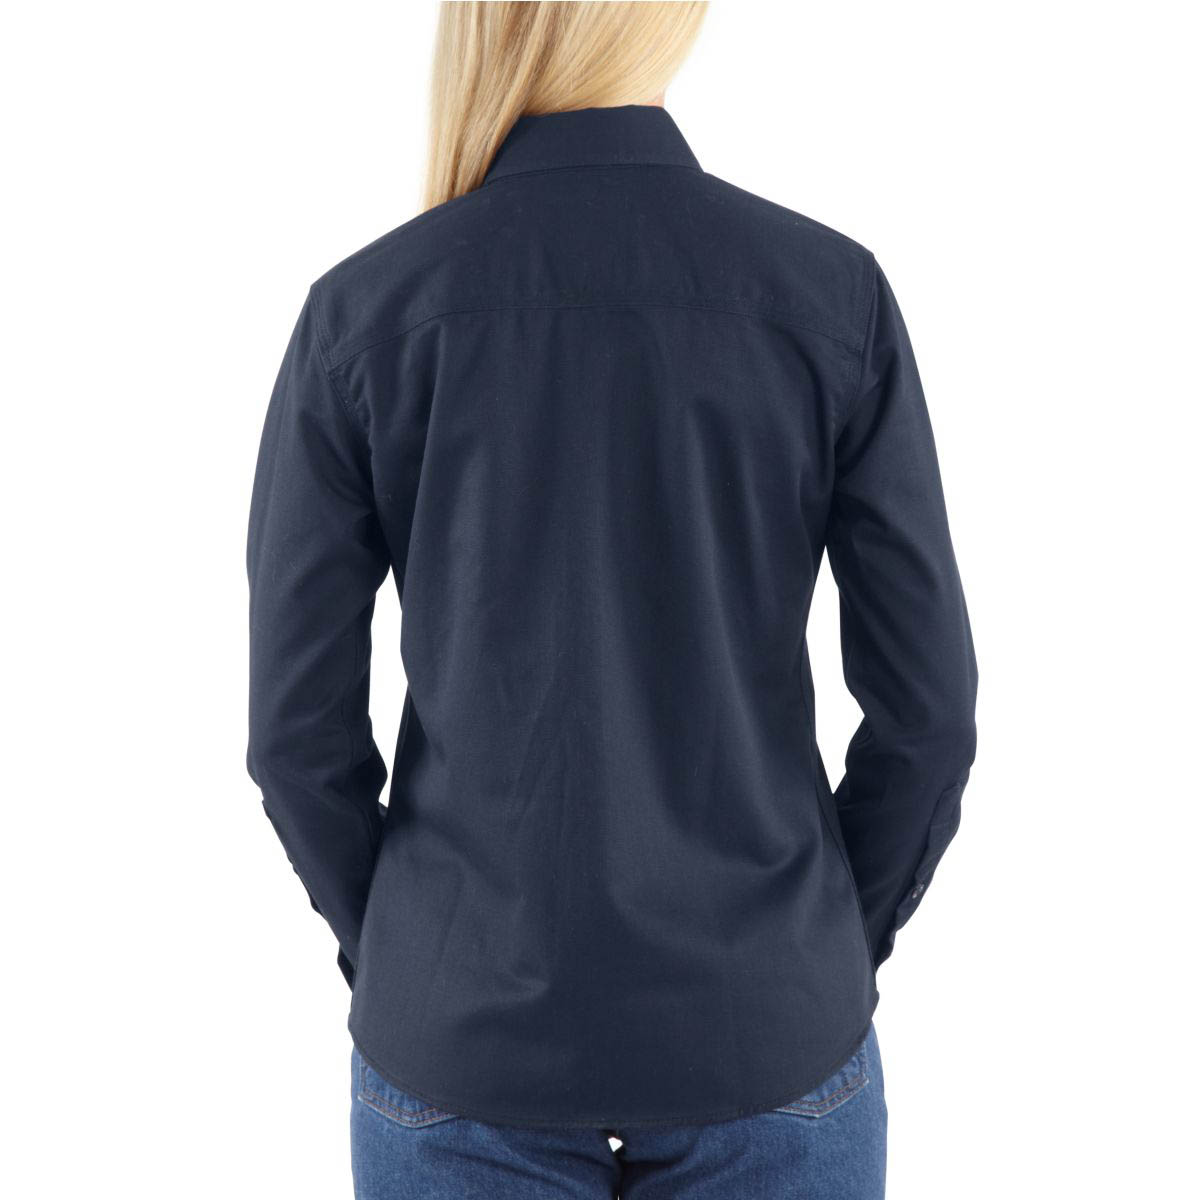 Carhartt Women's Flame Resistant Twill Shirt